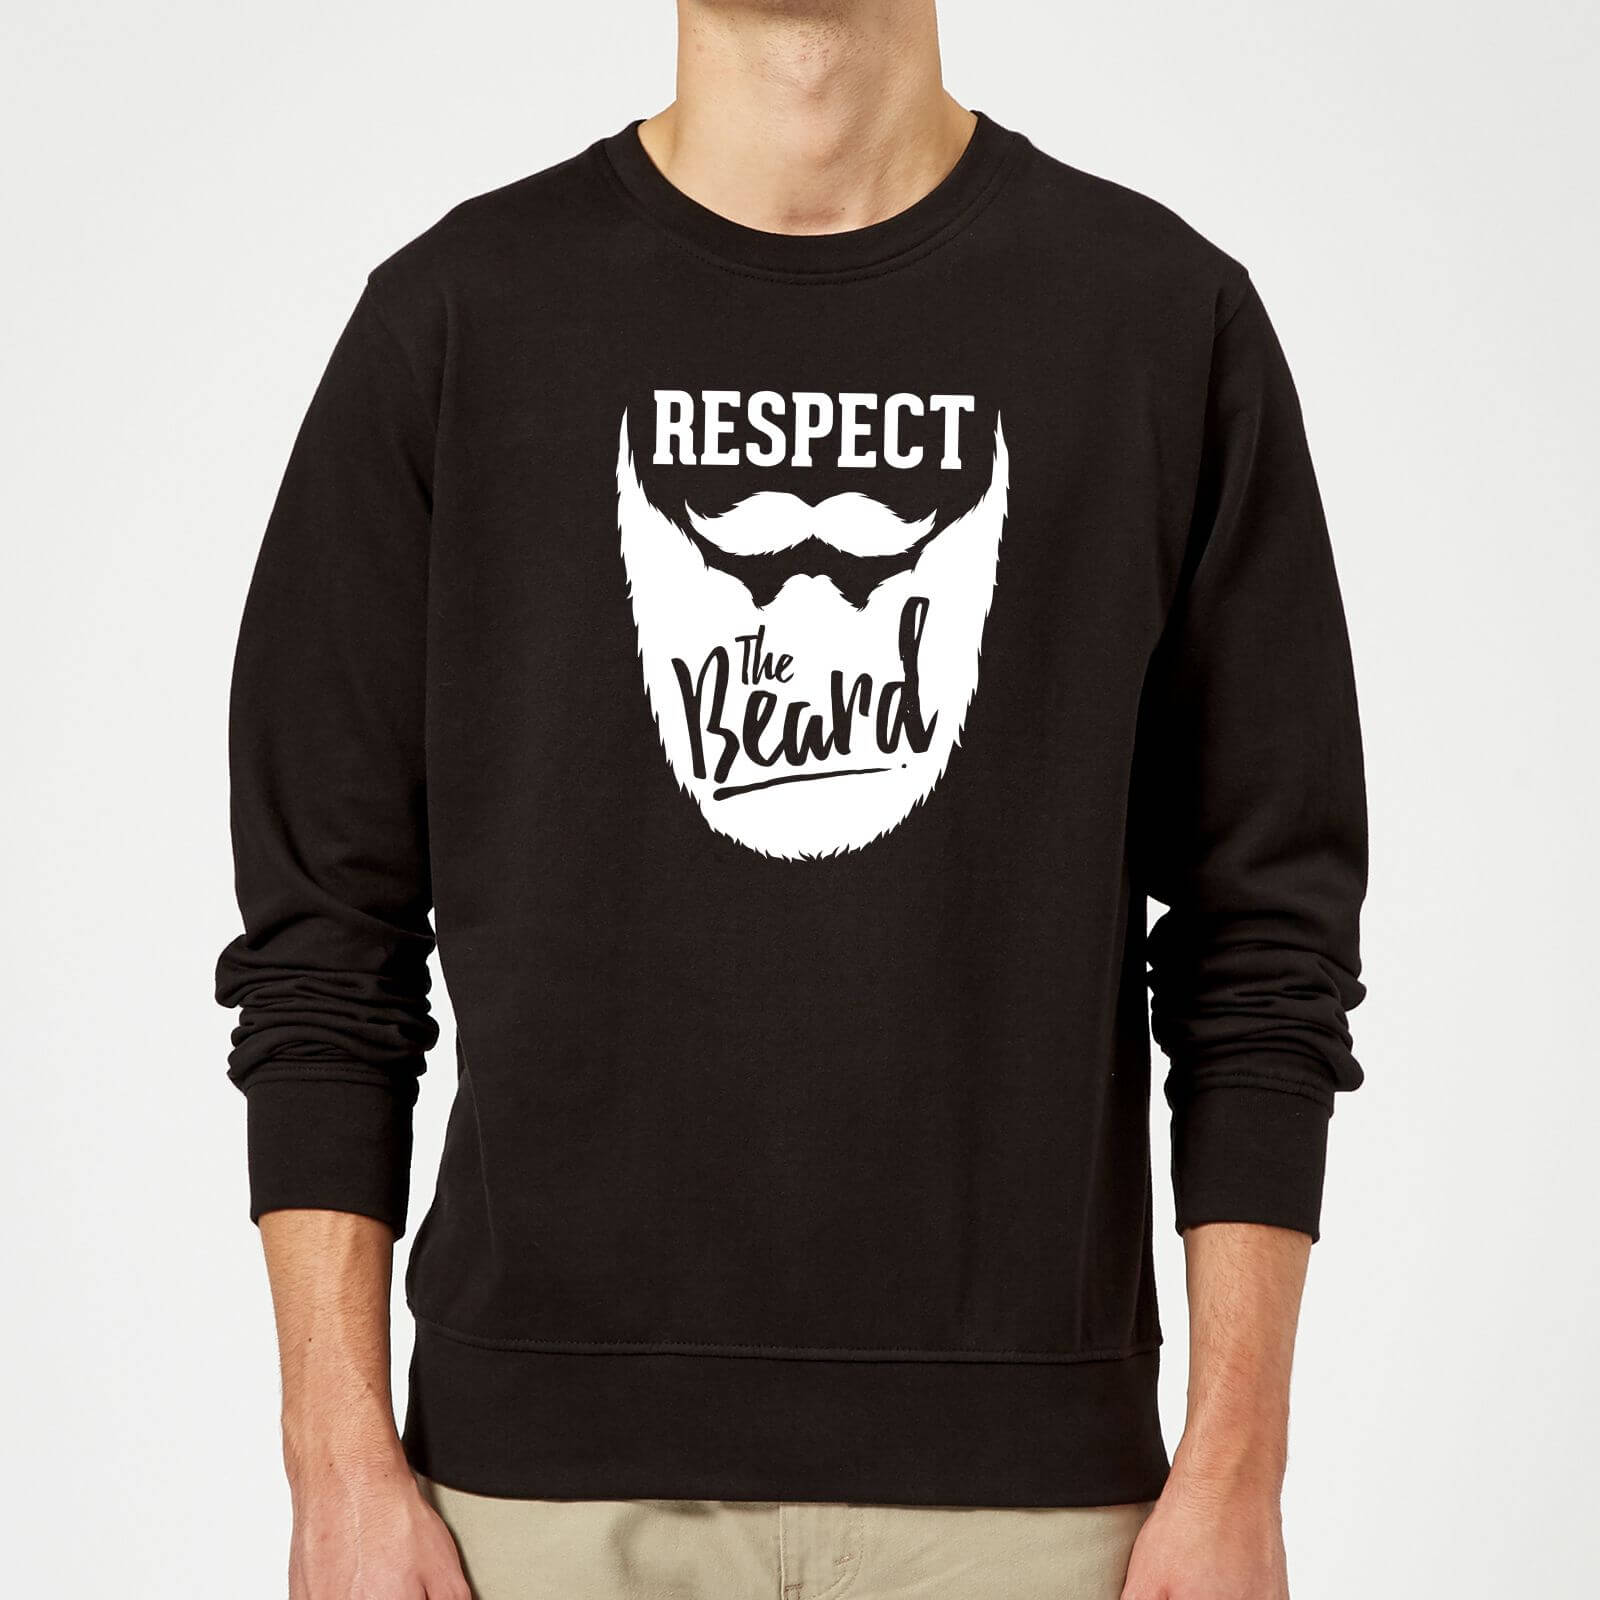 Respect The Beard Slogan Sweatshirt - Black - S - Black